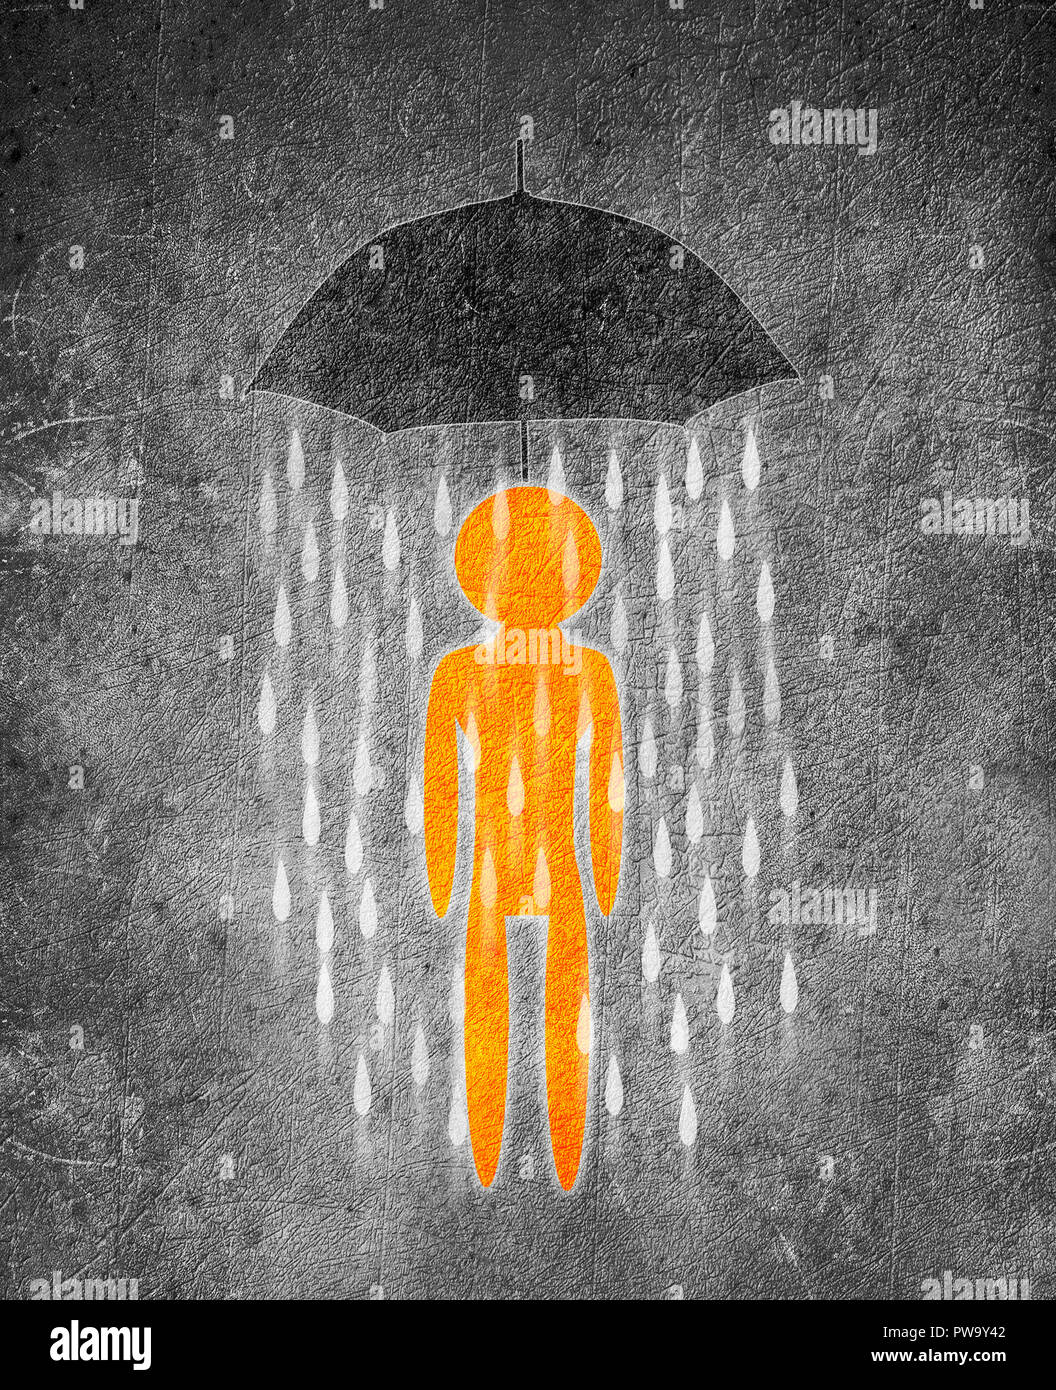 human figure and umbrella conceptual digital illustration Stock Photo